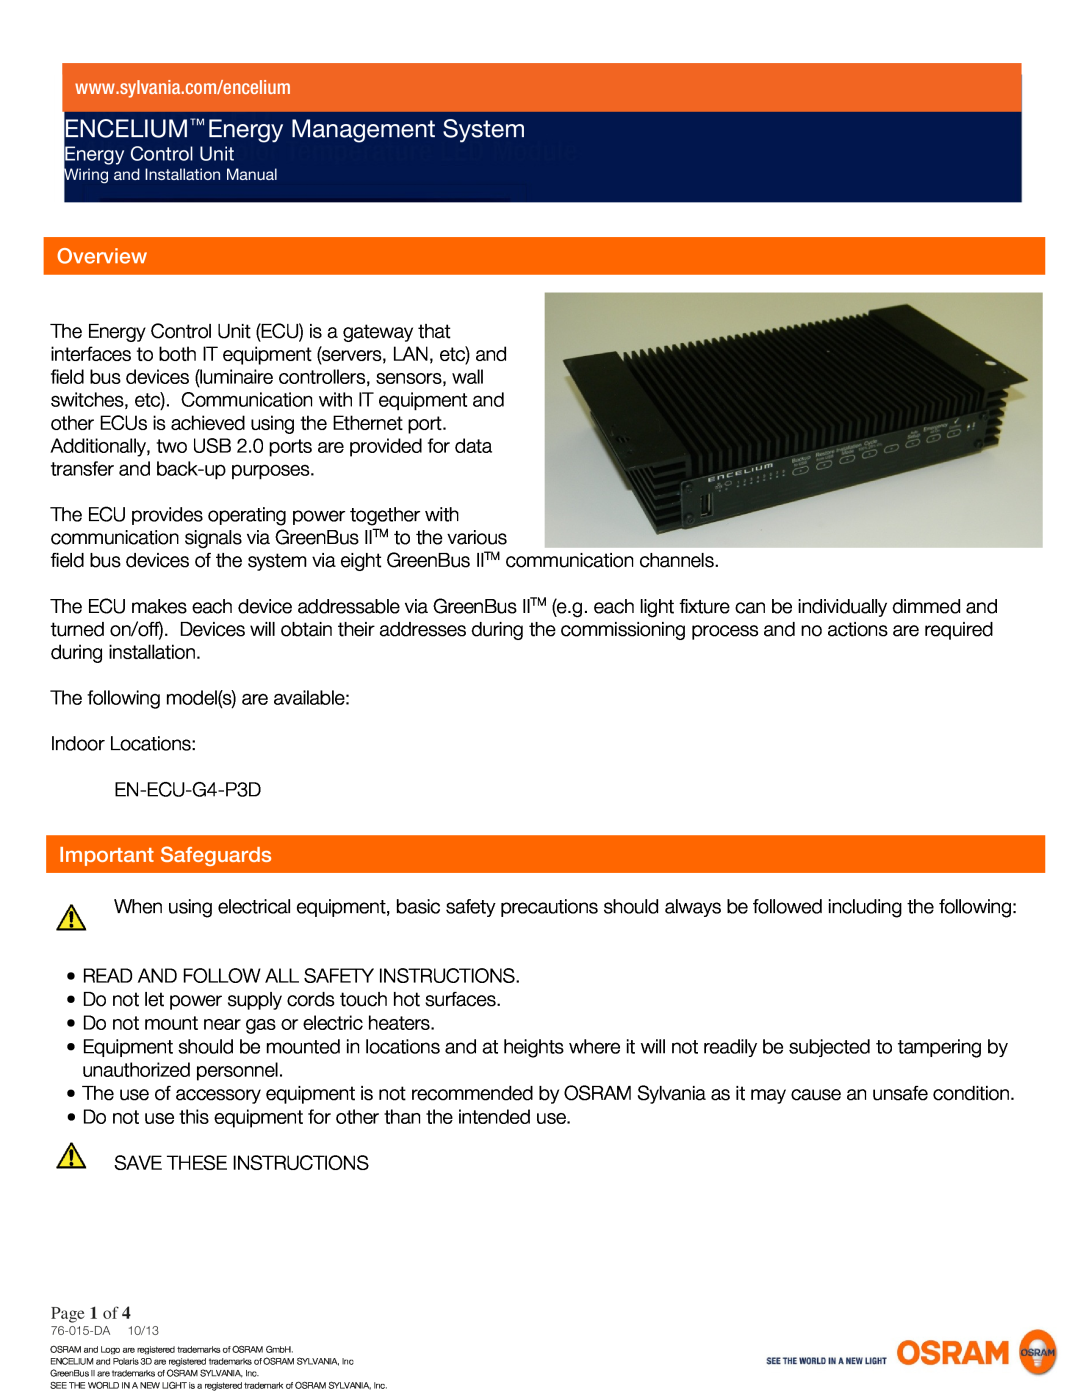 Sylvania EN-ECU-G4-P3D installation manual Overview, Important Safeguards, ENCELIUM Energy Management System 